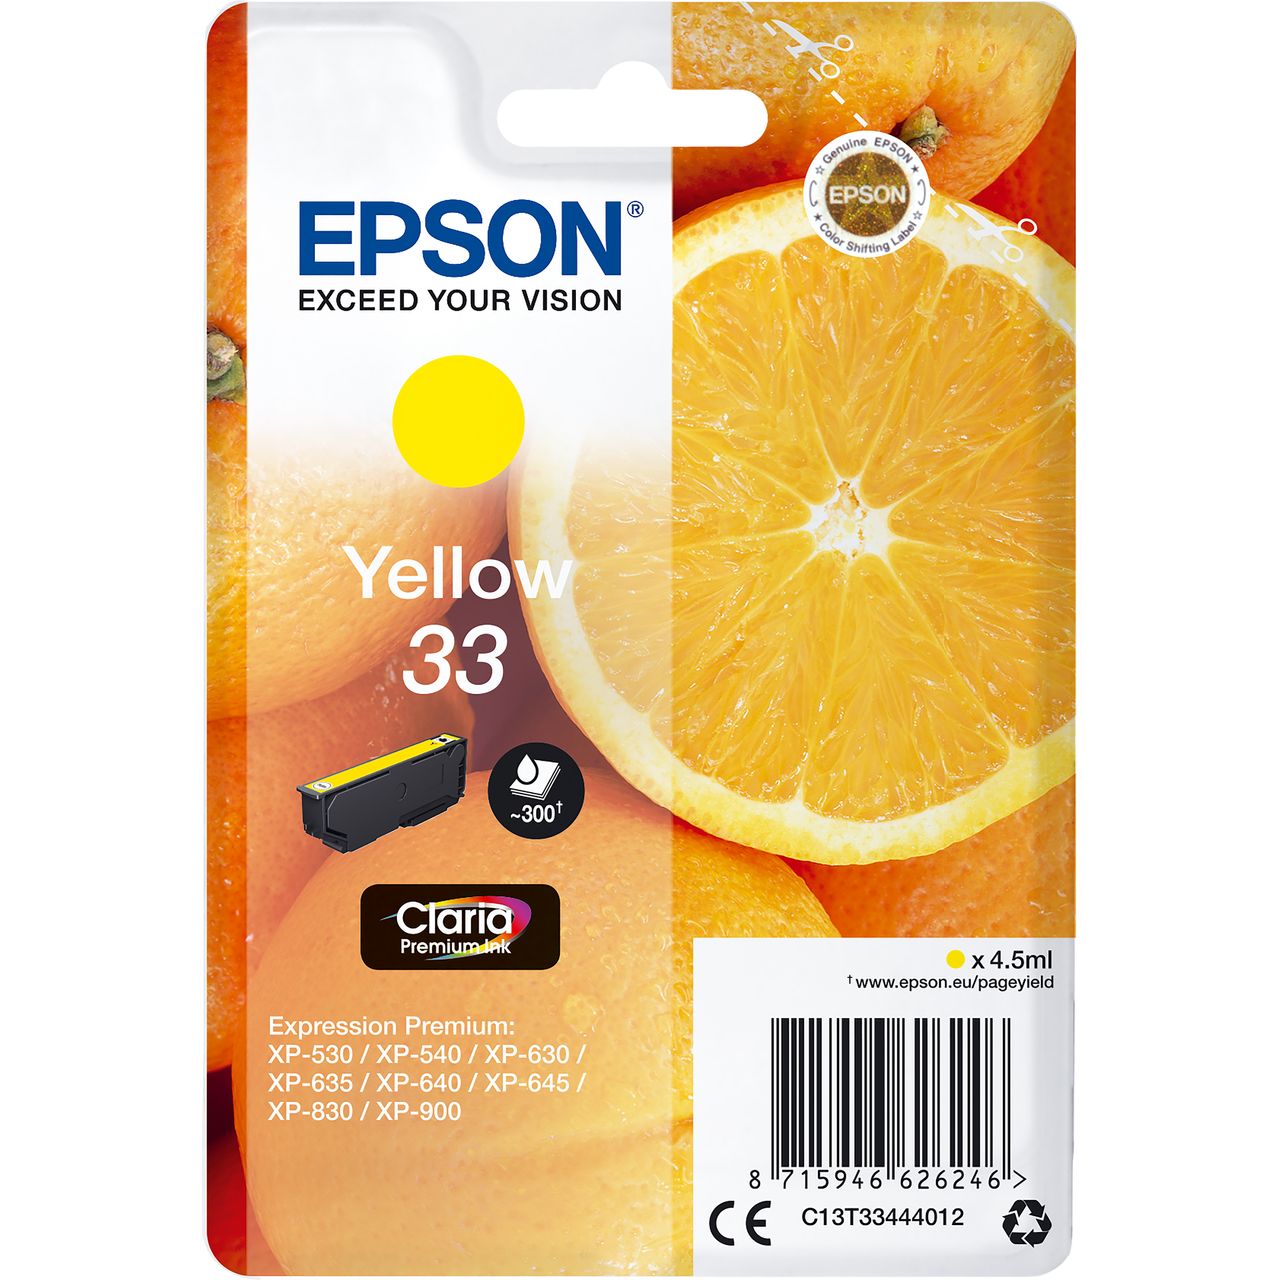 Epson Orange Singlepack Yellow 33 Claria Premium Ink Review